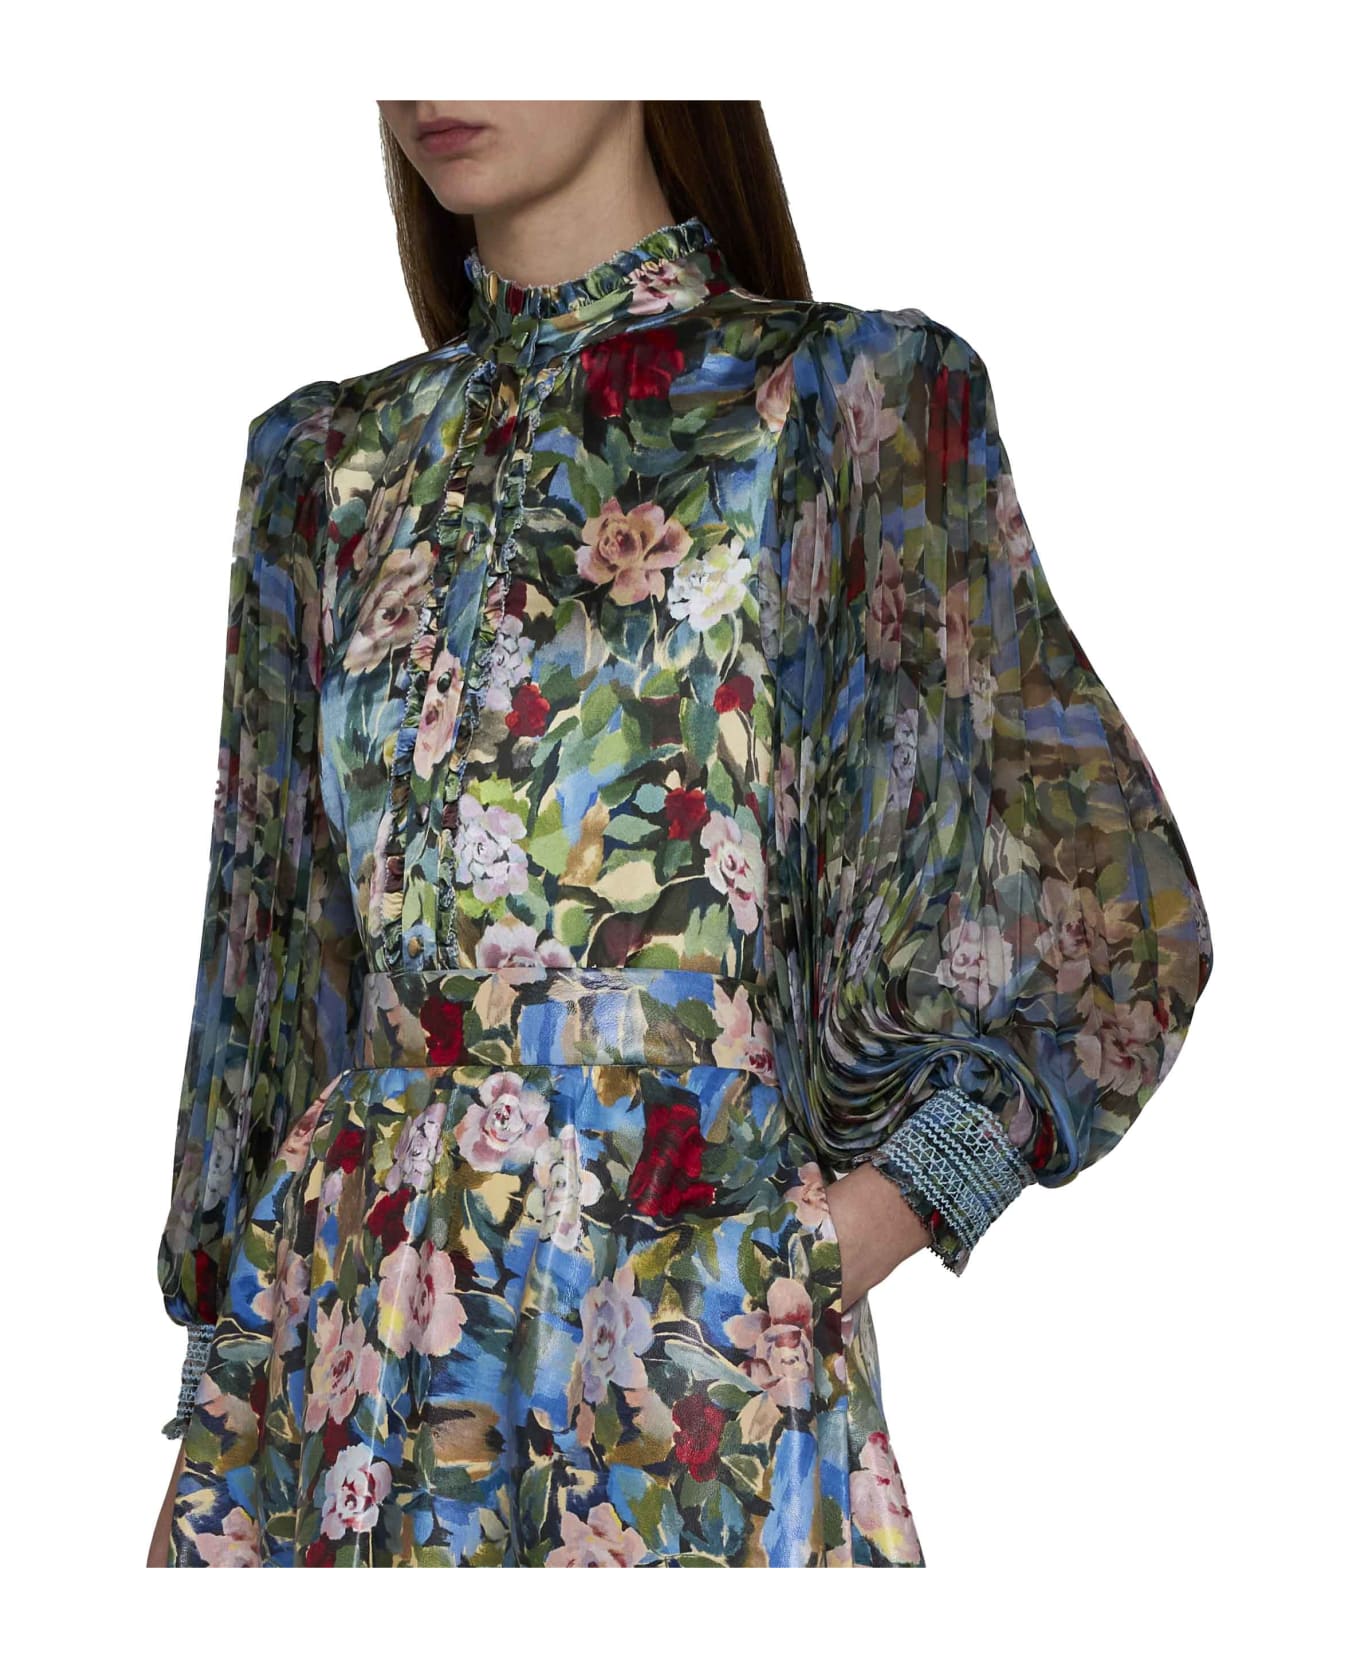 Alice + Olivia Shirt - Breeze floral sm ブラウス